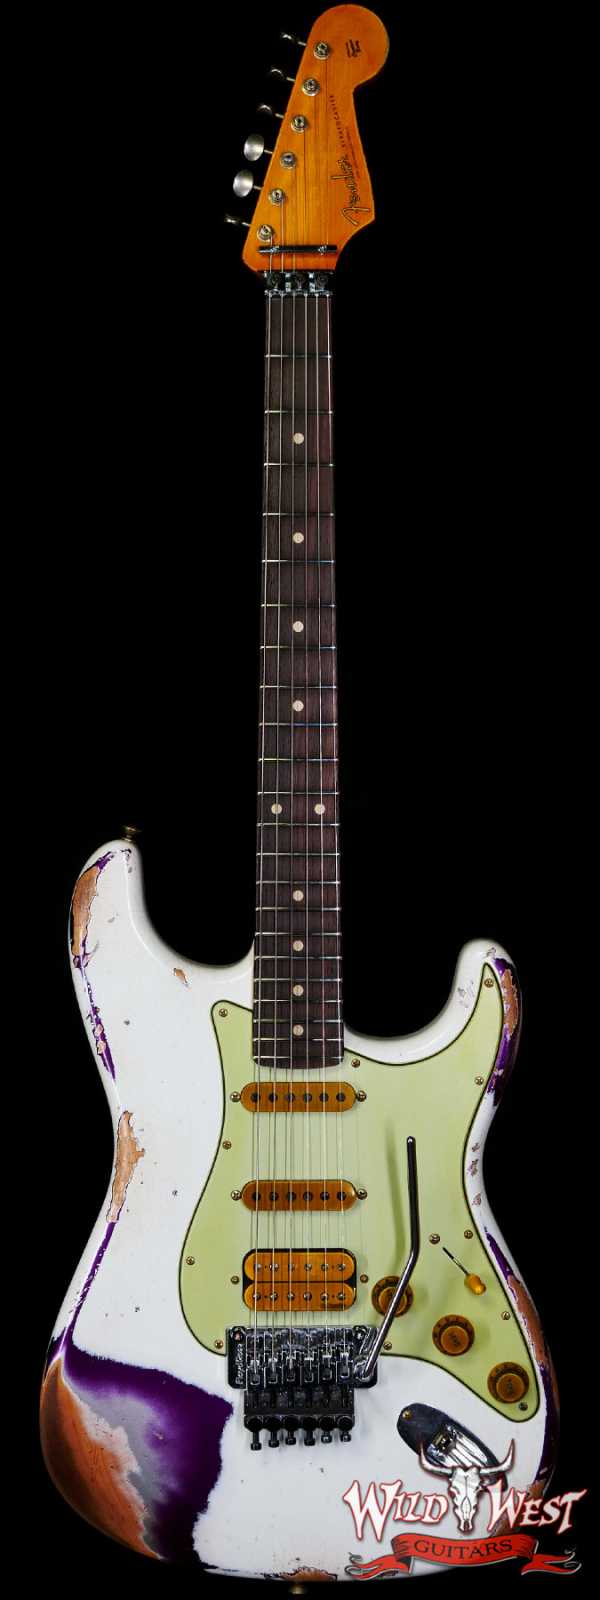 Fender Custom Shop Wild West White Lightning Stratocaster HSS Floyd Rose Rosewood Board 22 Frets Heavy Relic Purple Metallic